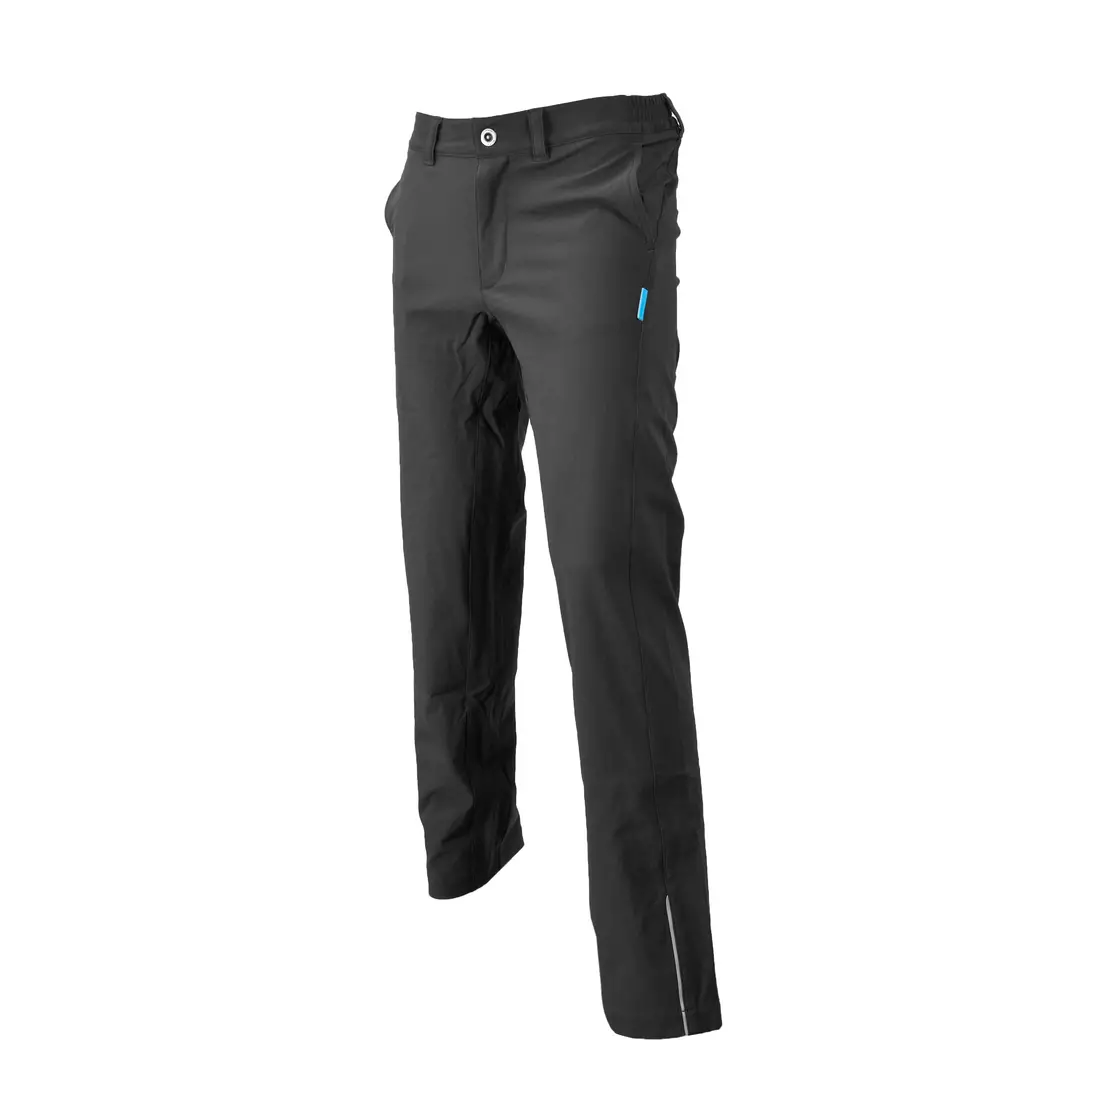 SHIMANO CWPATWLS16UL W's Insulated Comfort Pants - women's insulated cycling pants